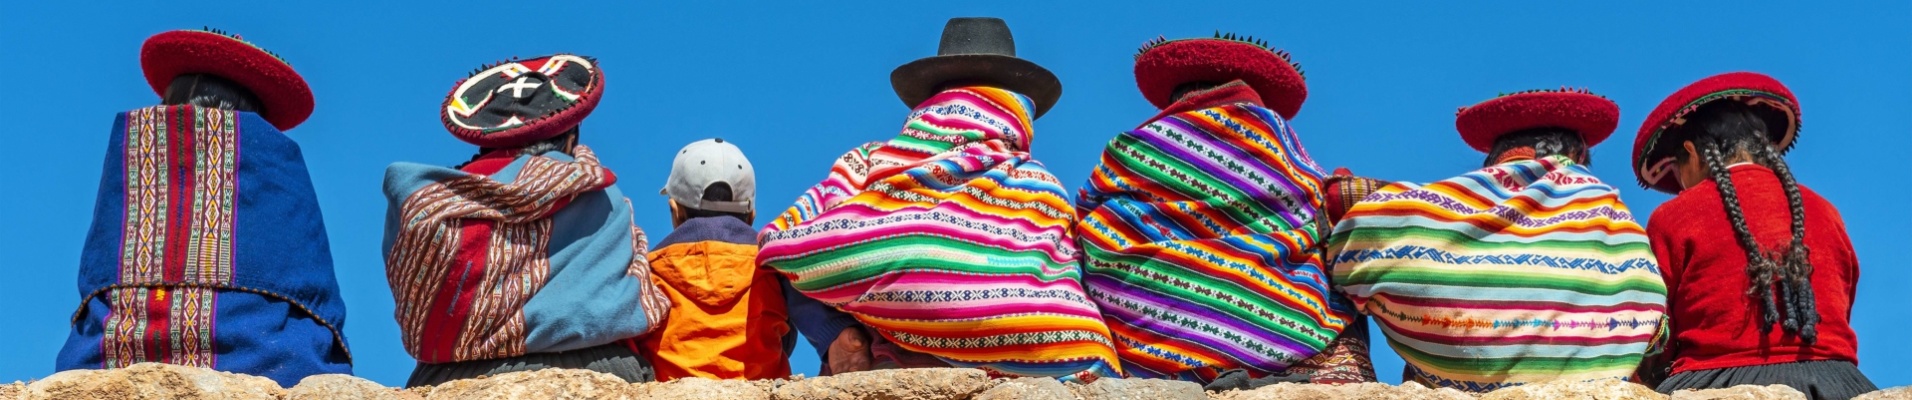 communaute-quechua-perou